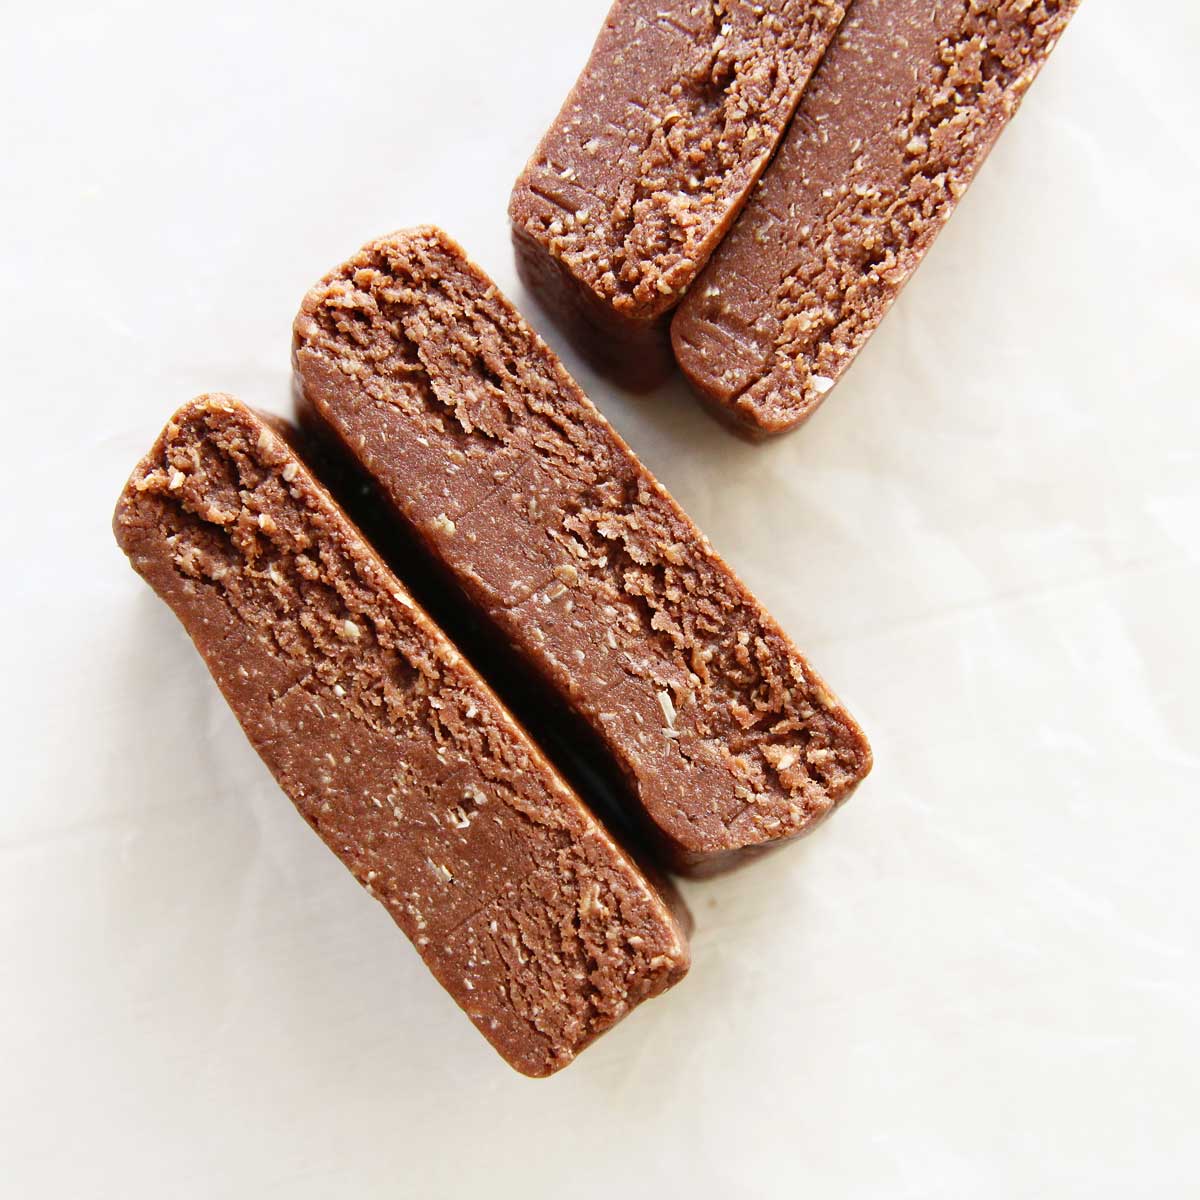 10-Minute Chocolate Peanut Butter Oatmeal Protein Bars - Banana Chocolate Mochi